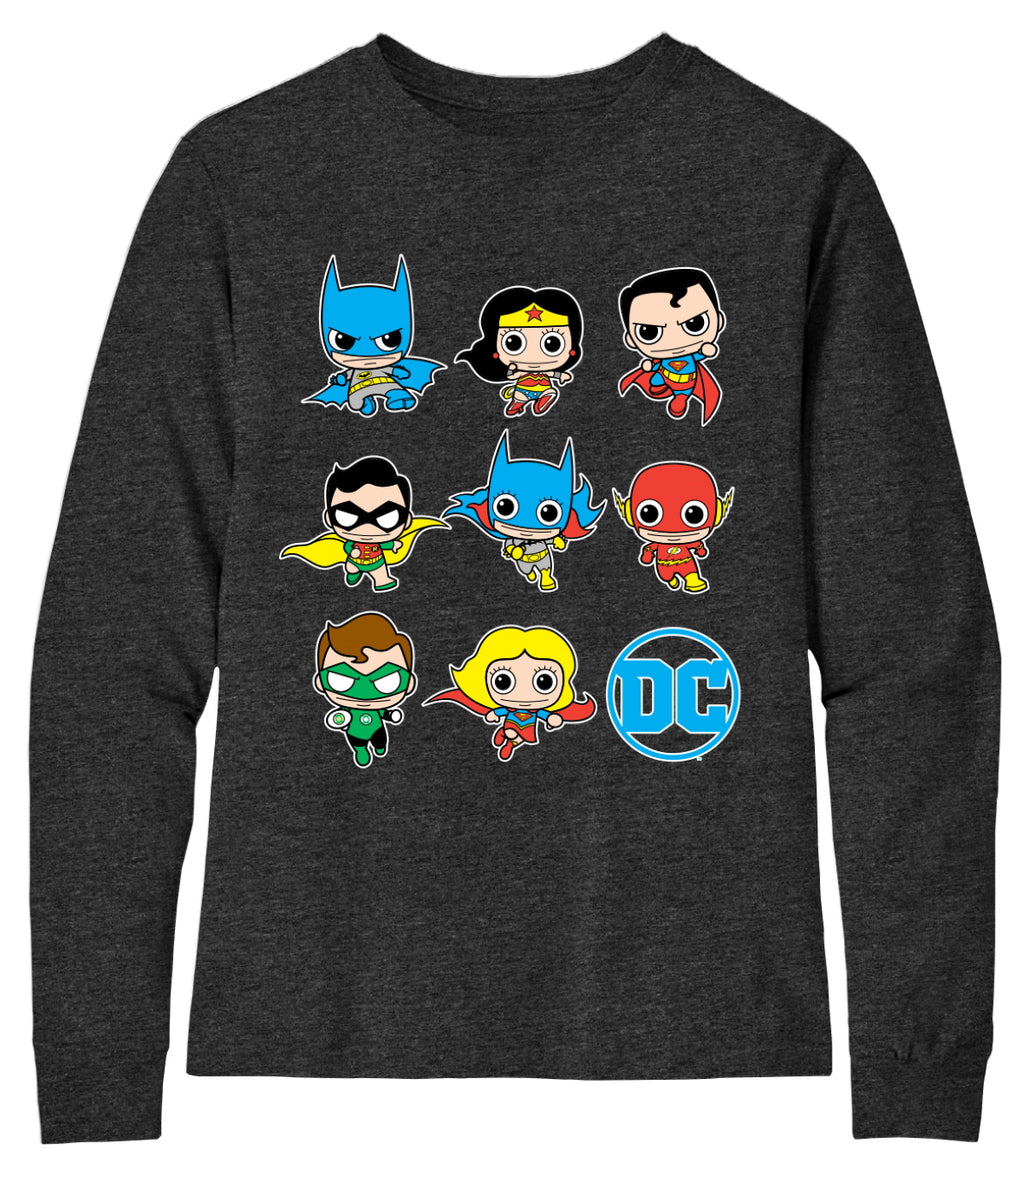 DC Comics Batman Short-Sleeve T-Shirt-4XL